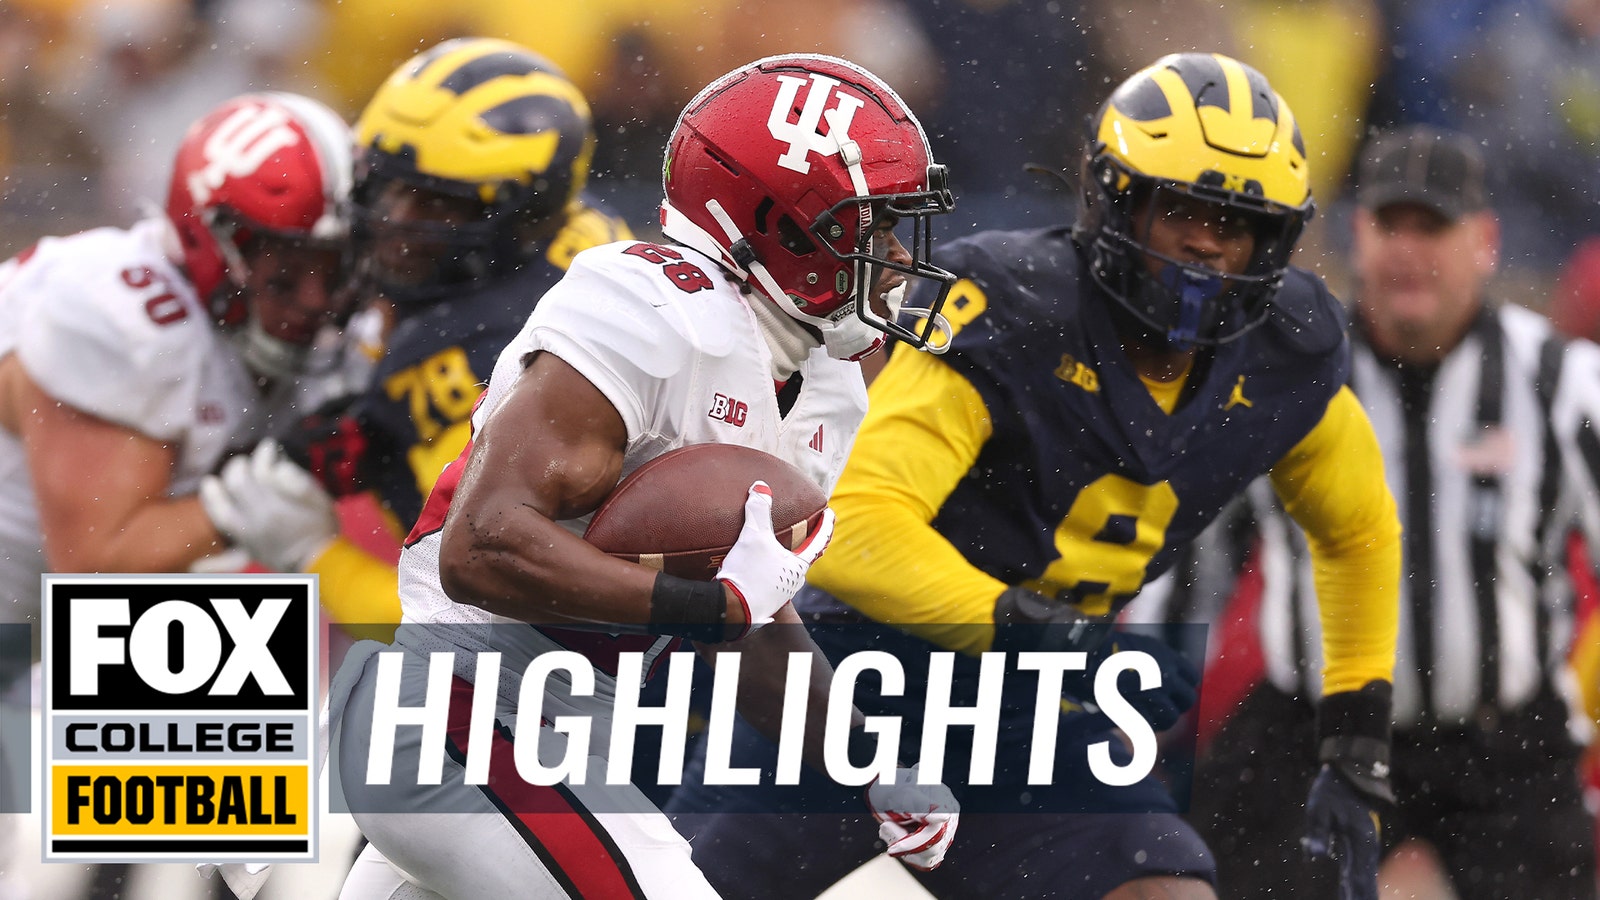 Highlights: Michigan rolls past Indiana